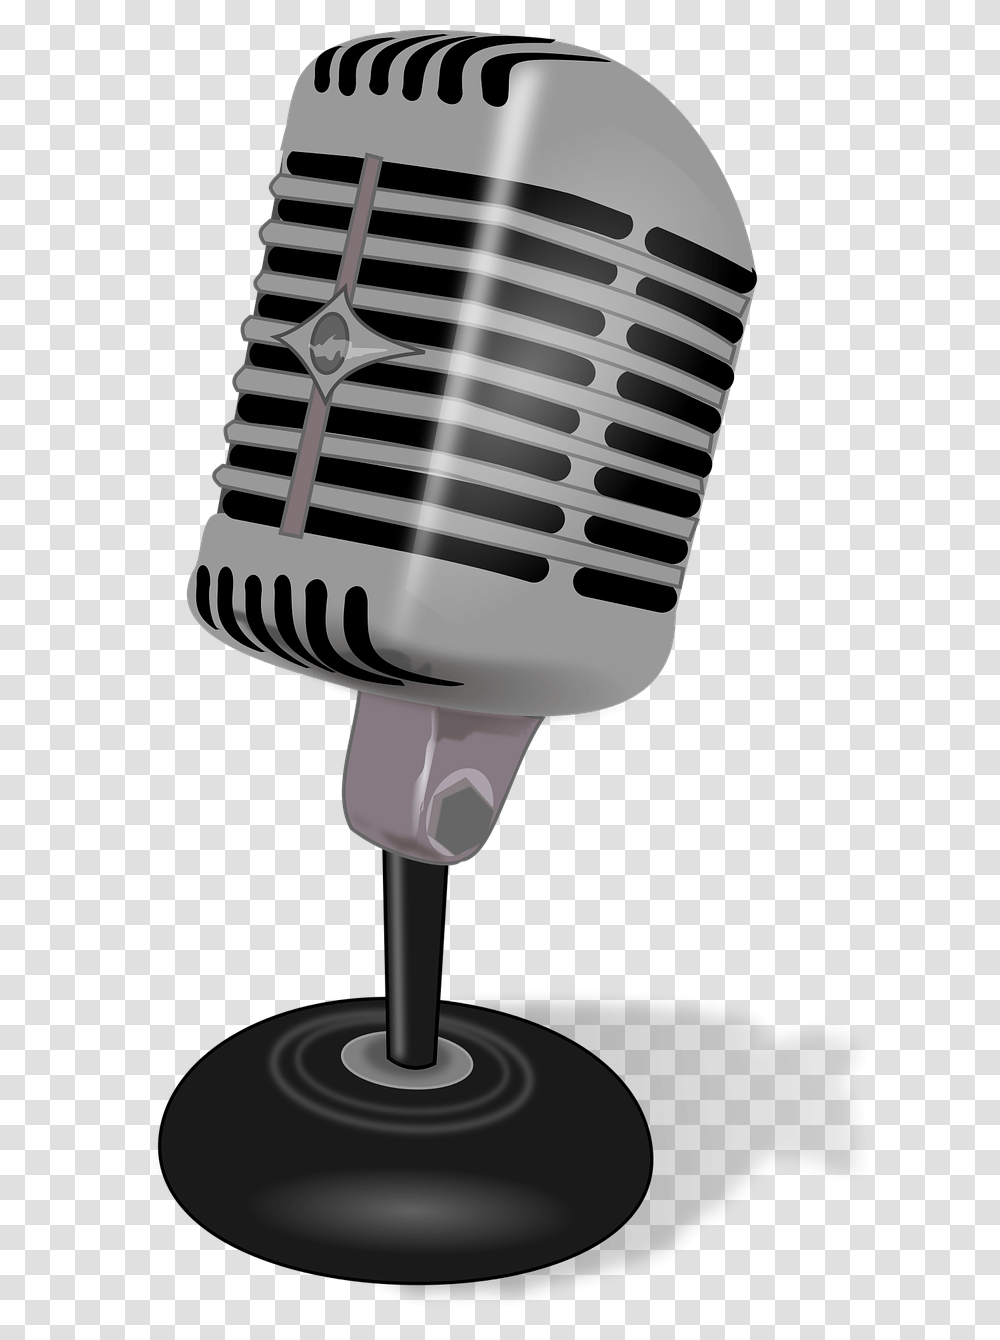 Microphone Clipart Gambar Microphone Clip Art Free, Lamp, Helmet, Clothing, Apparel Transparent Png